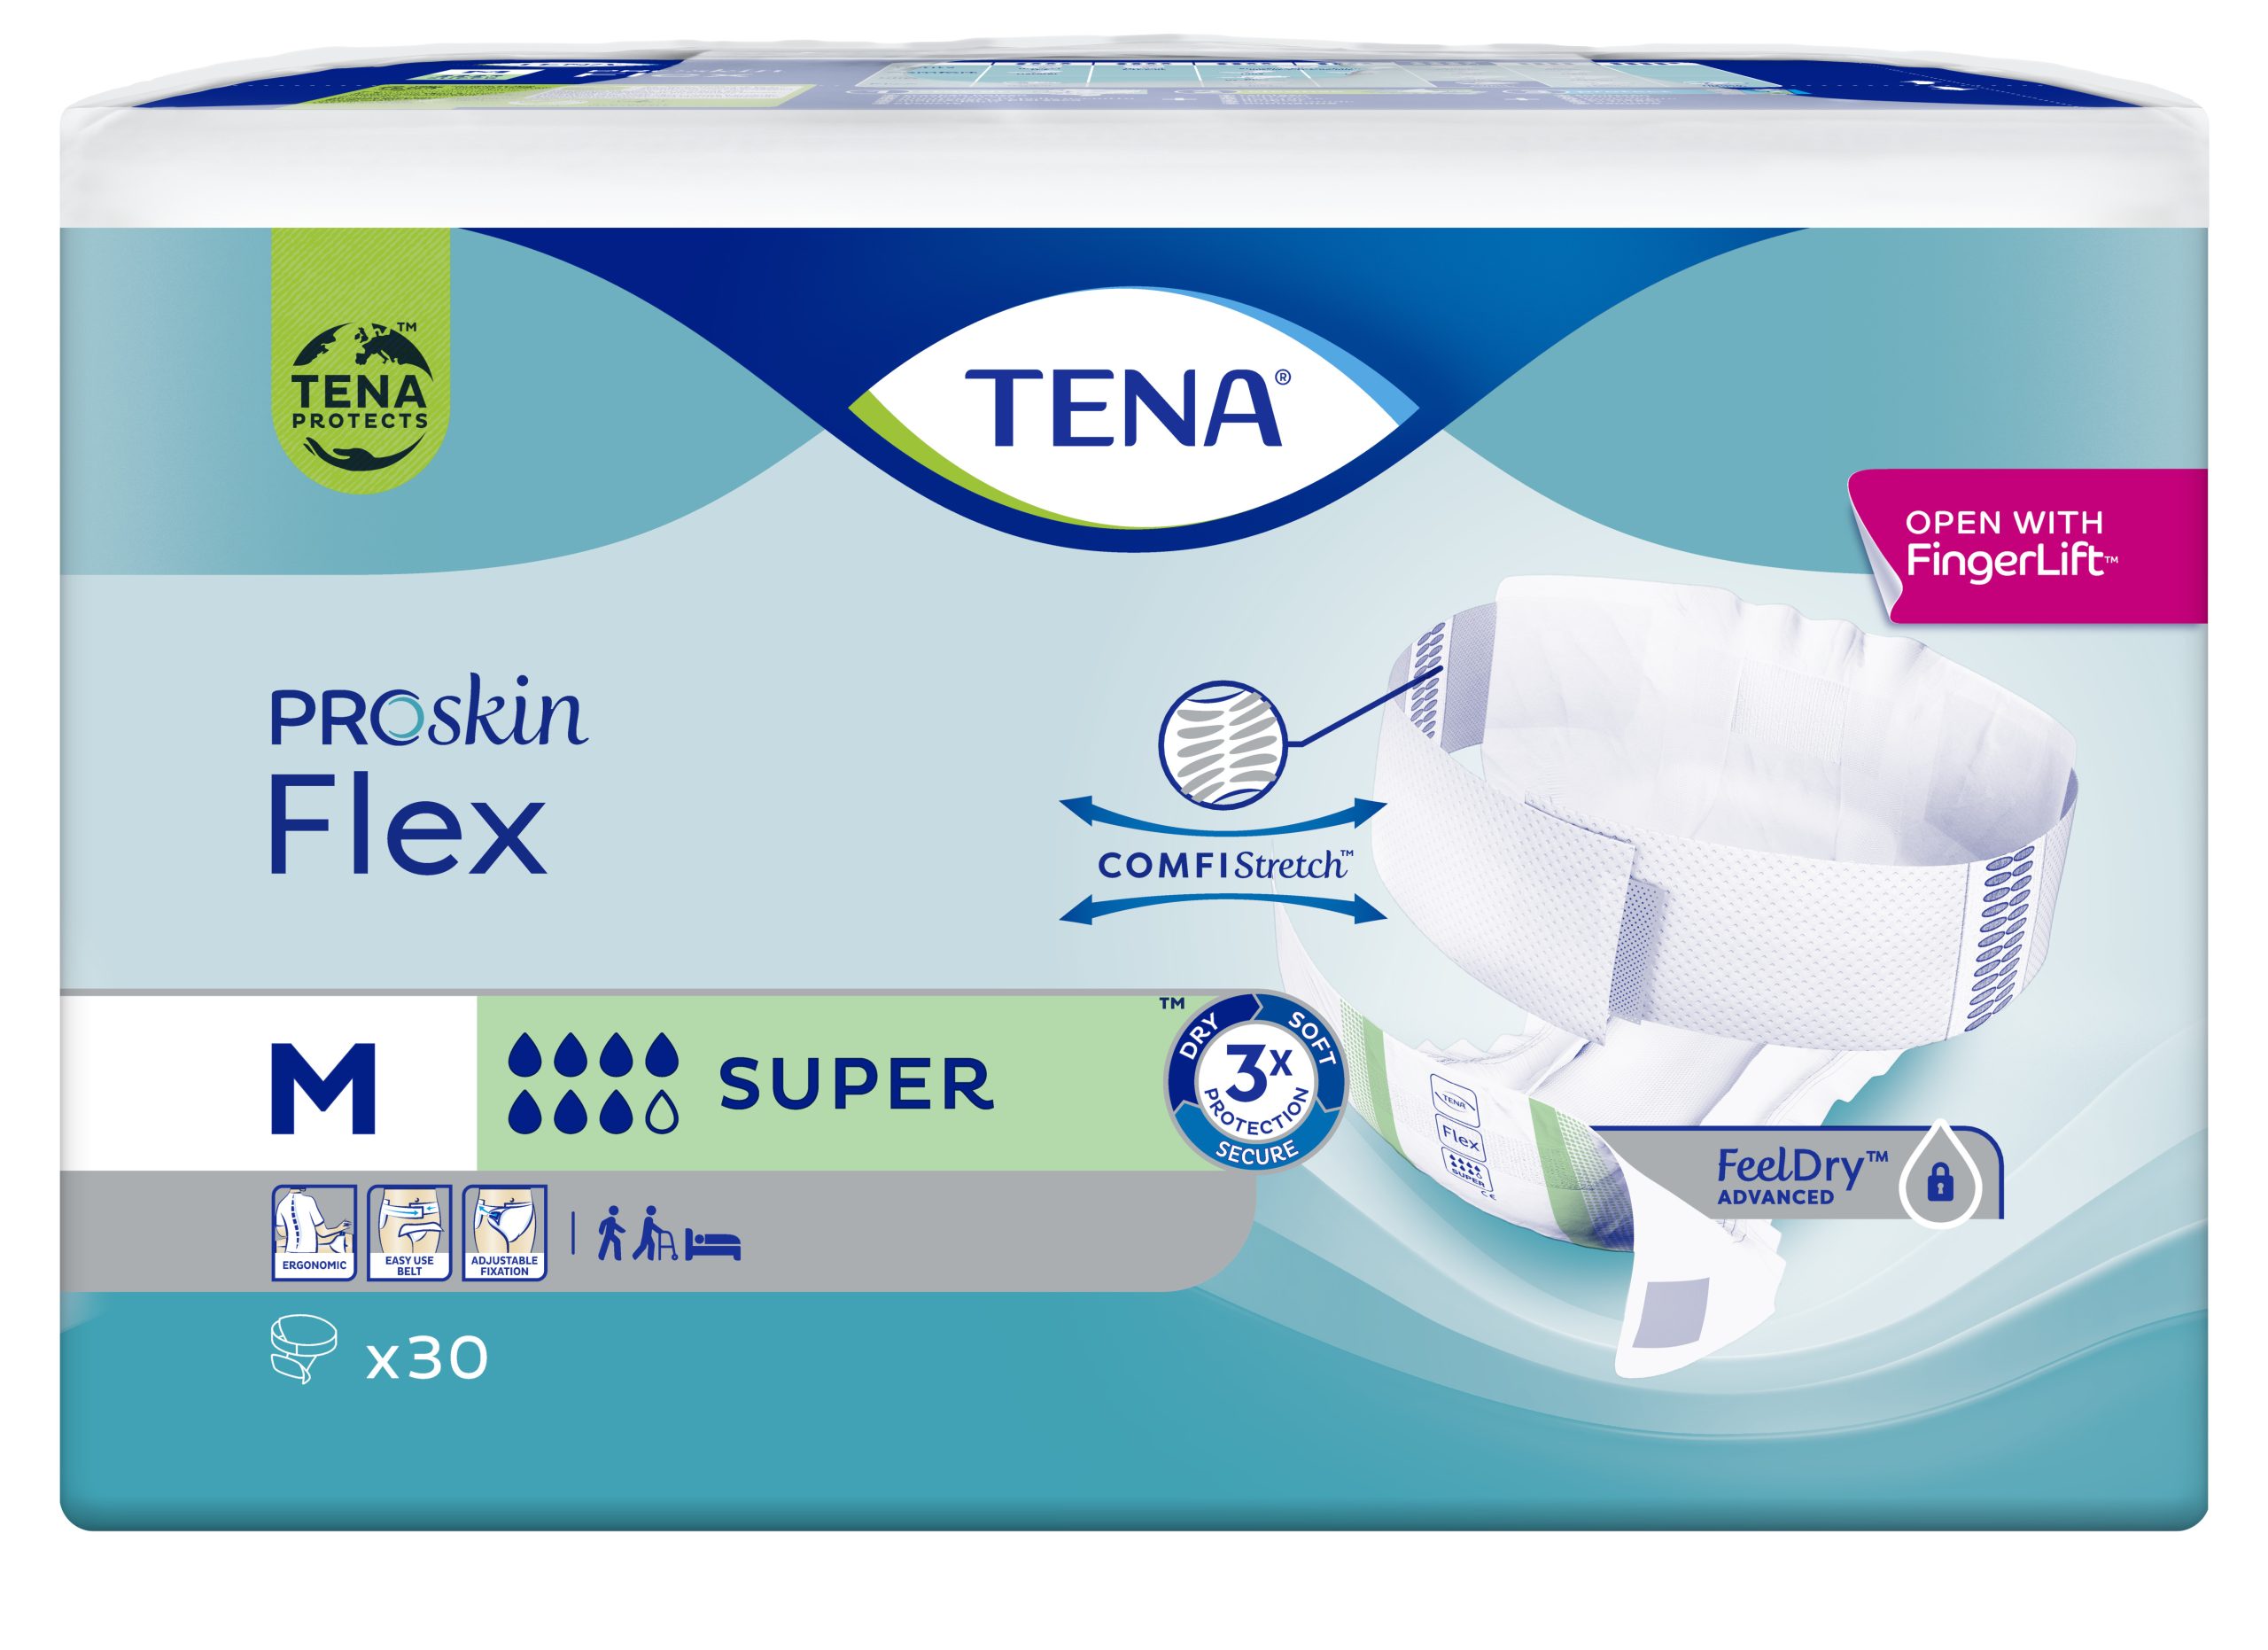 TENA Flex PROskin Flex Super Medium 2179ml